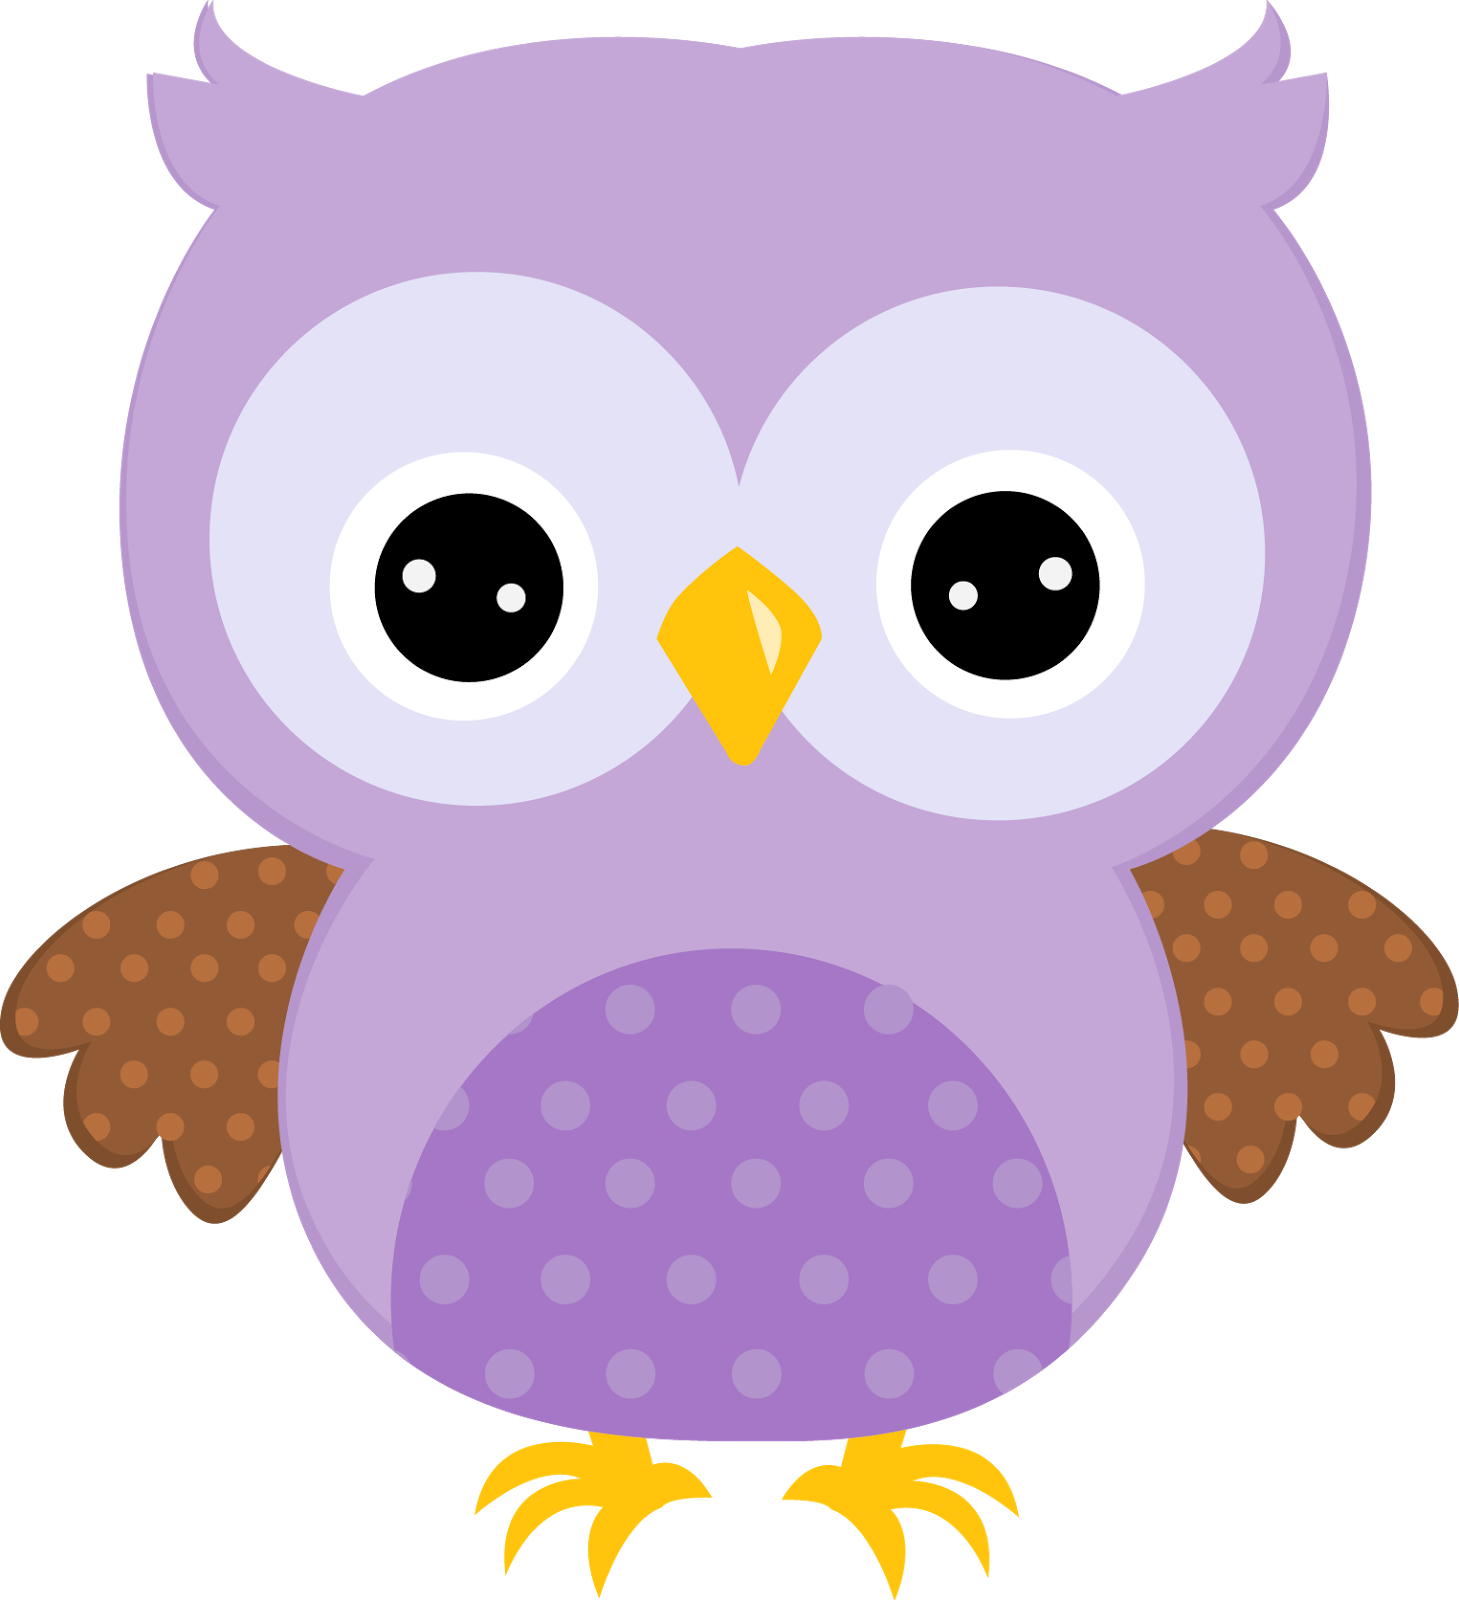 Nursery clipart owl. De b hos colores